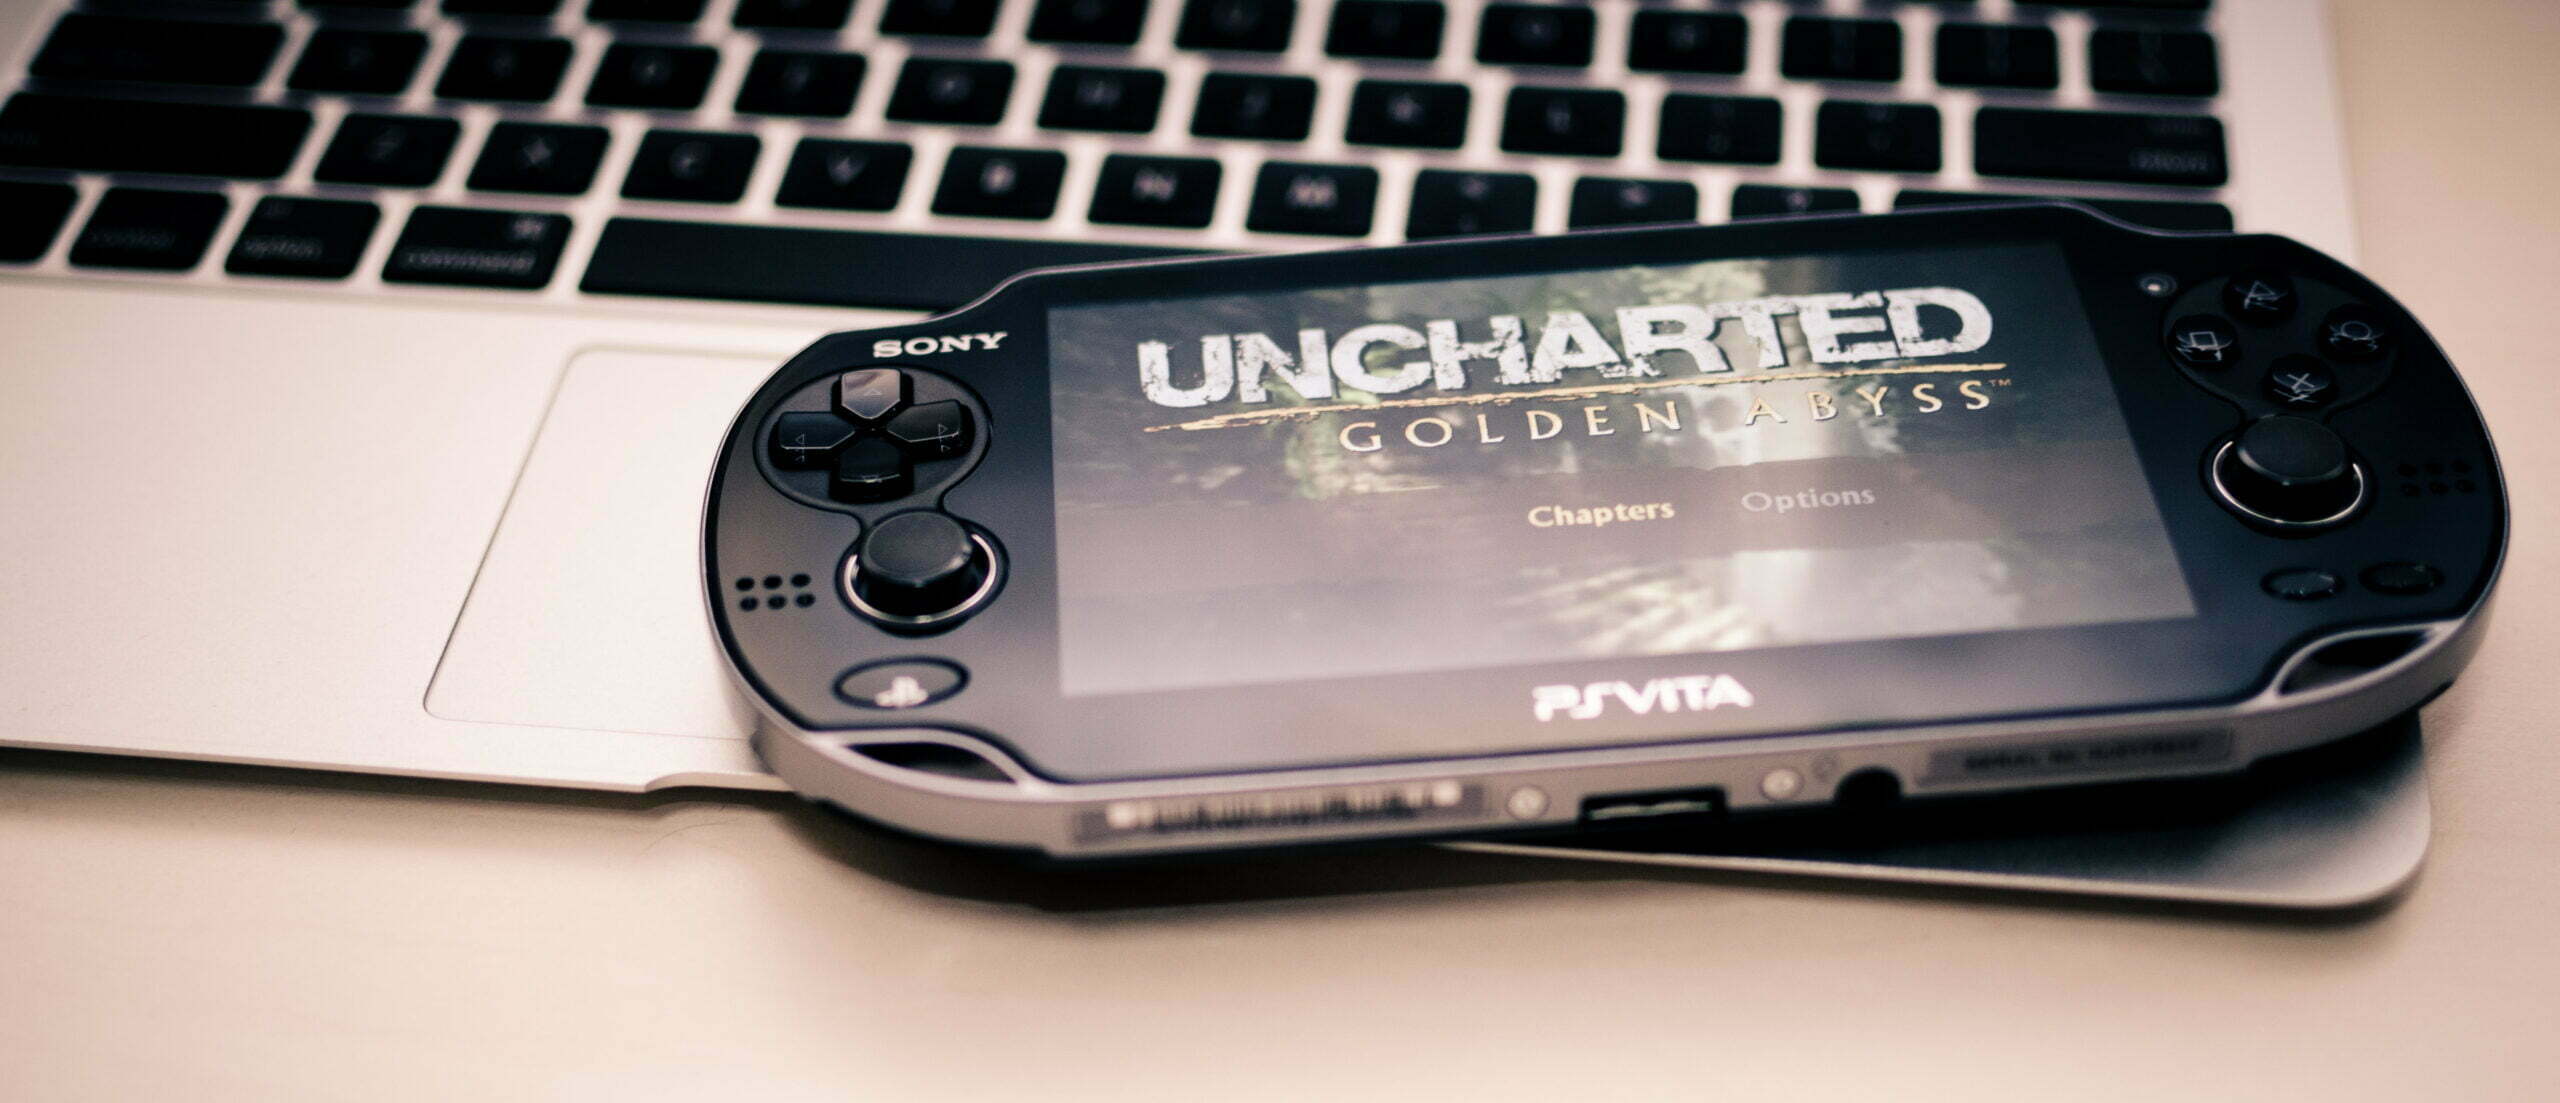 A black PlayStation Vita playing Uncharted